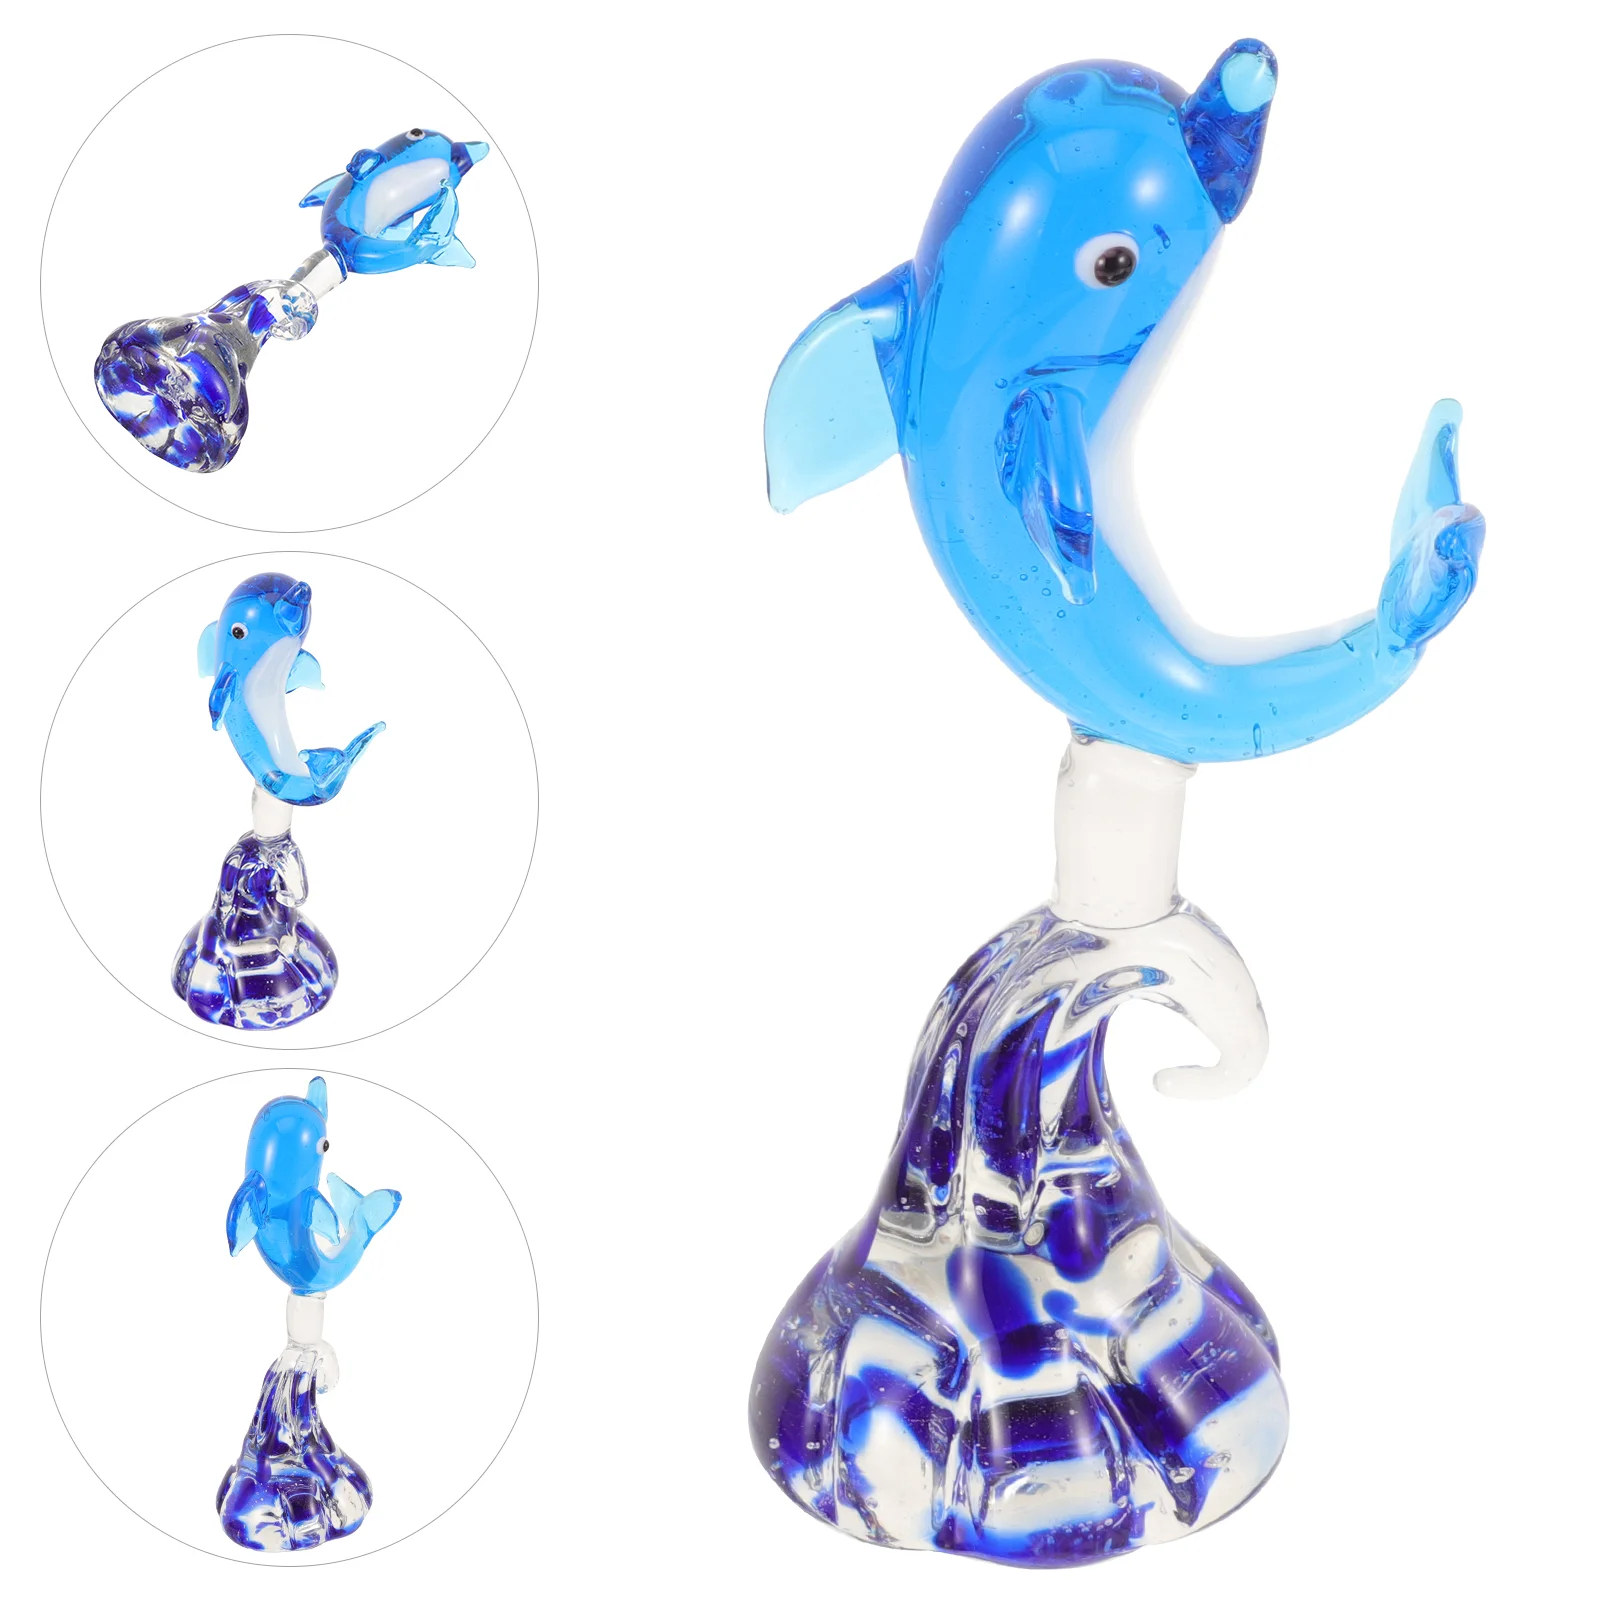 

Ocean Decor Dolphin Desktop Decoration Decorations Sea Animal Figurine Glass Ornament Home Adornment